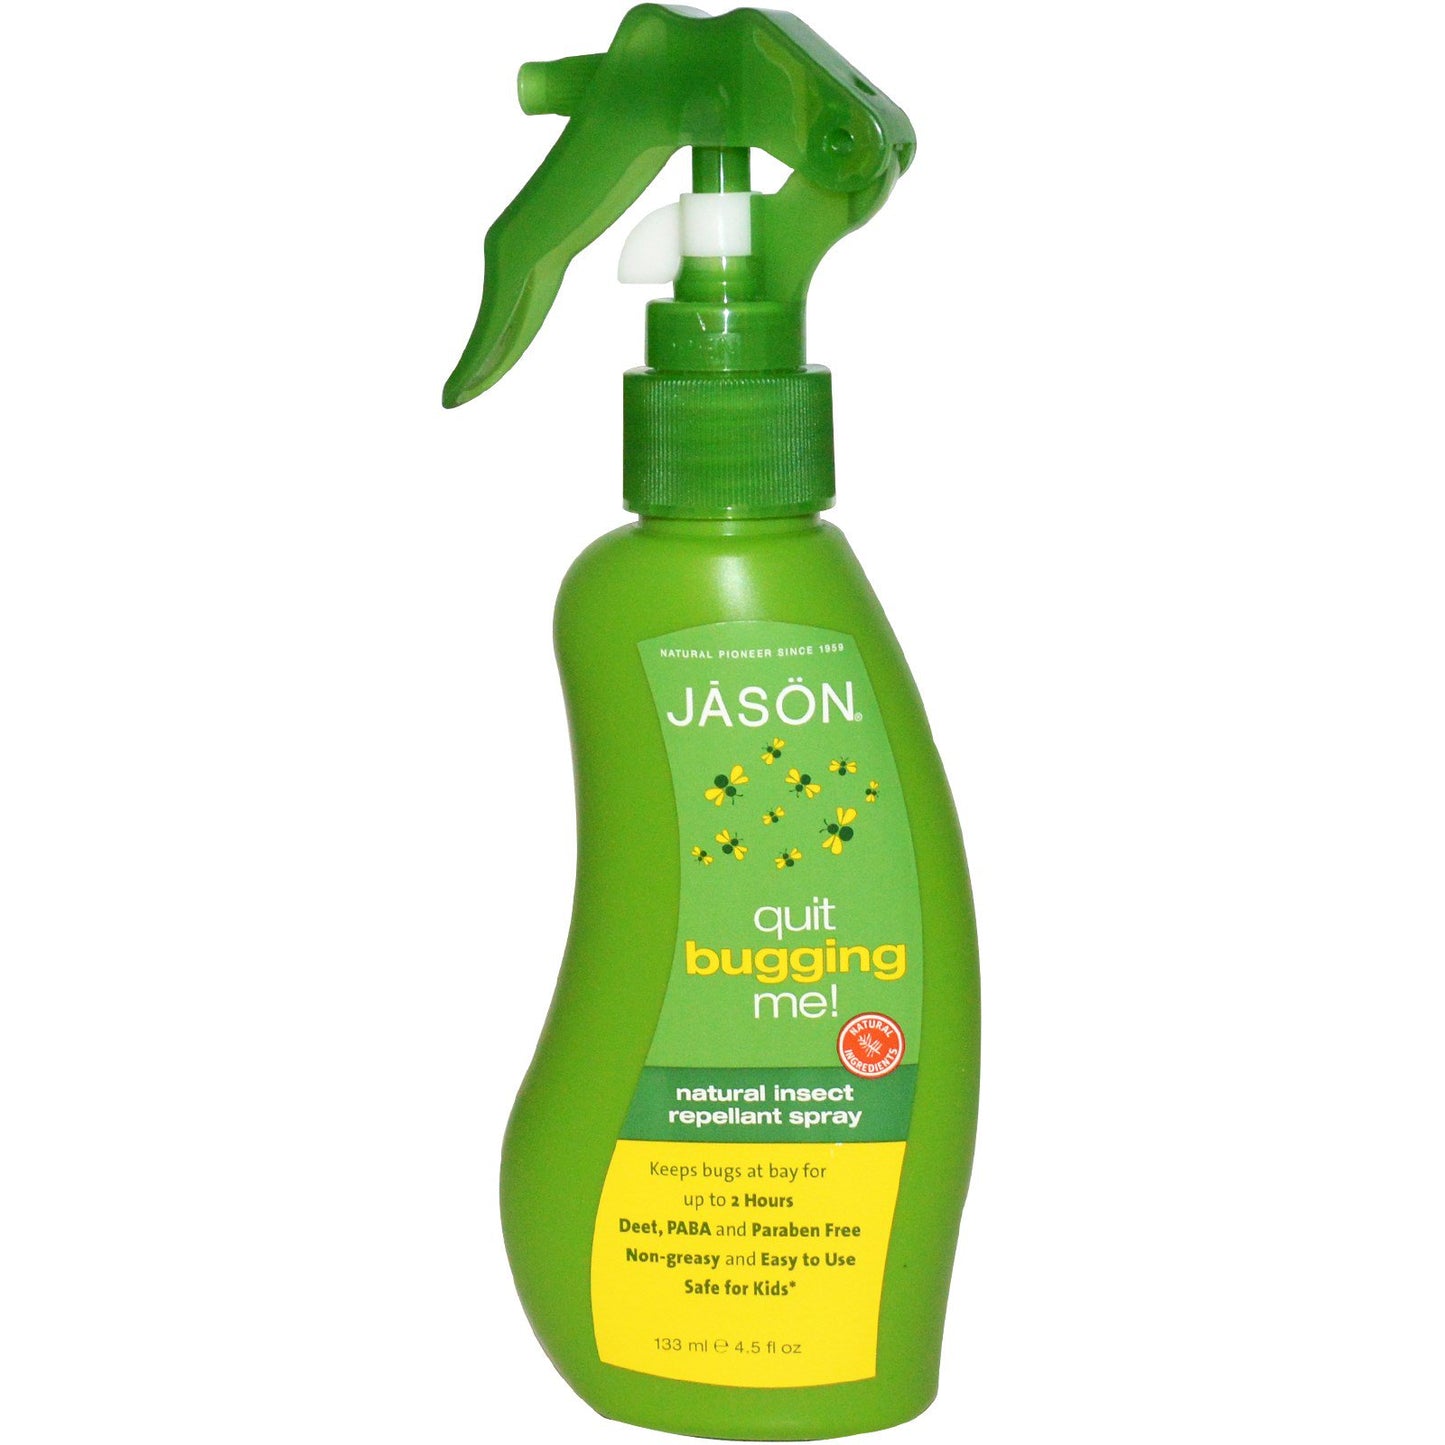 Jason Natural, Quit Bugging Me!, Spray répulsif naturel contre les insectes, 4,5 fl oz (133 ml)